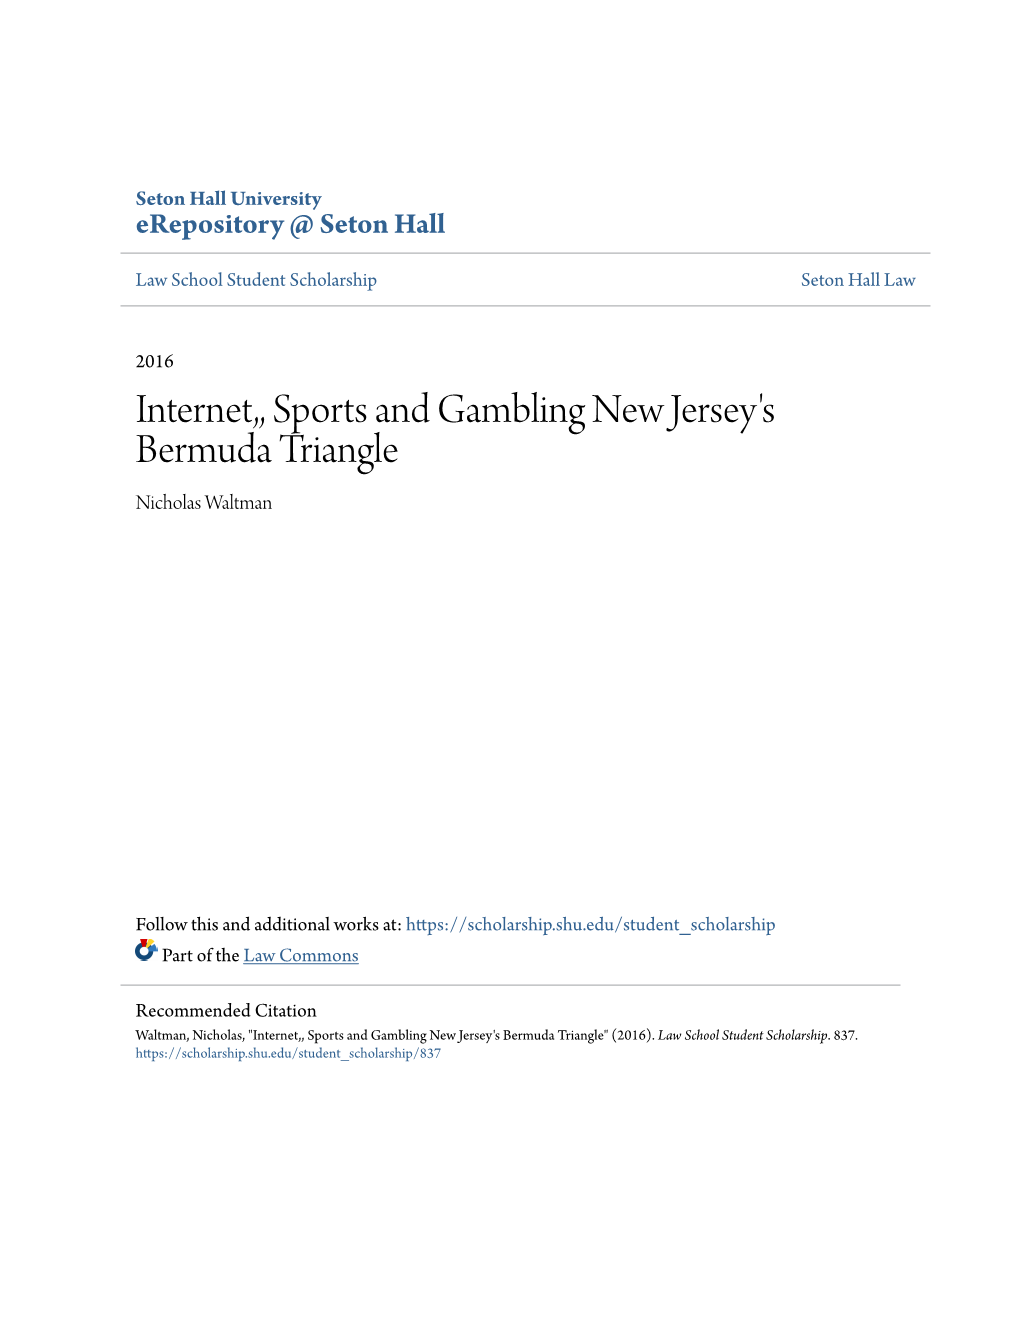 Internet,, Sports and Gambling New Jersey's Bermuda Triangle Nicholas Waltman